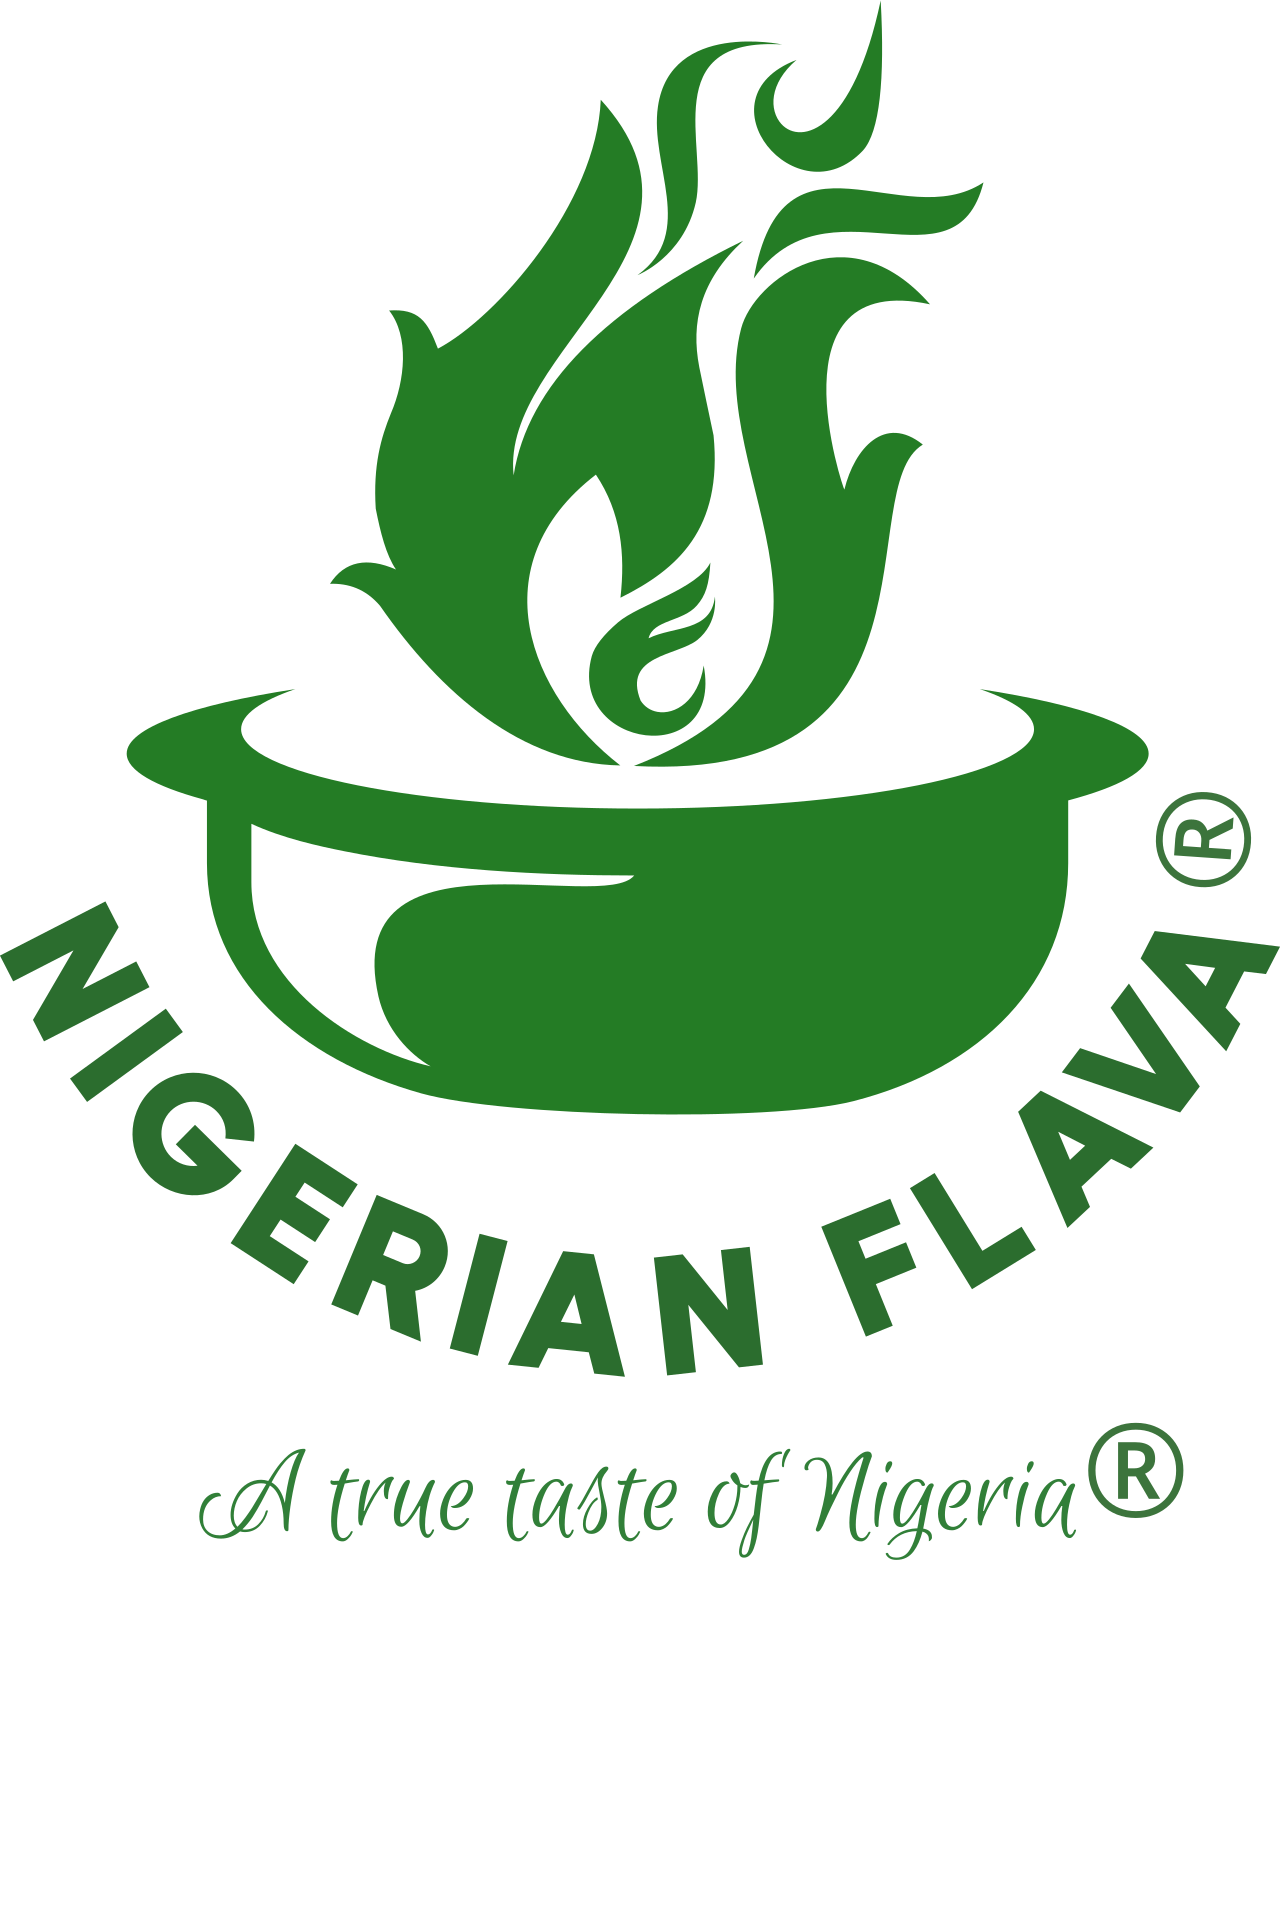 Nigerian Flava's web page